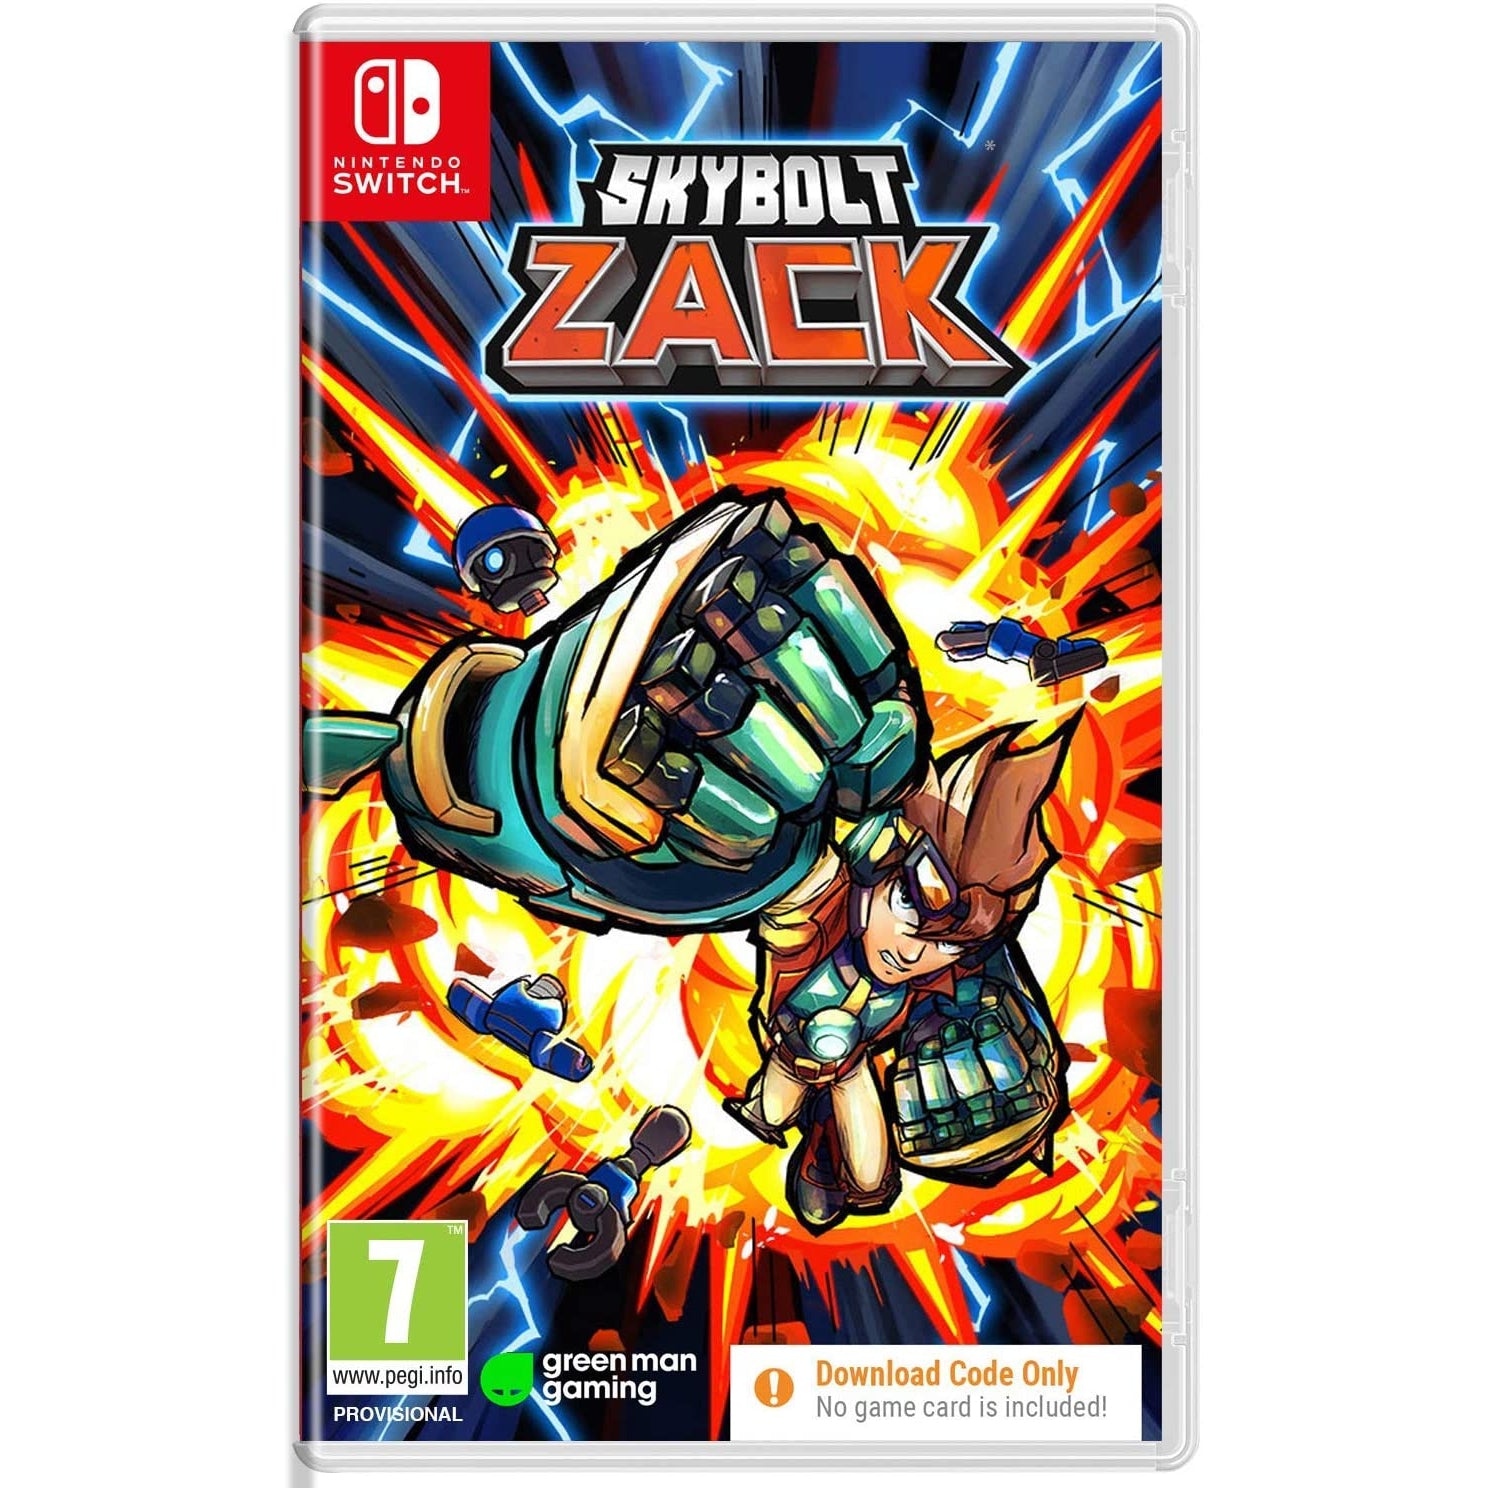 Skybolt Zack (Nintendo Switch)